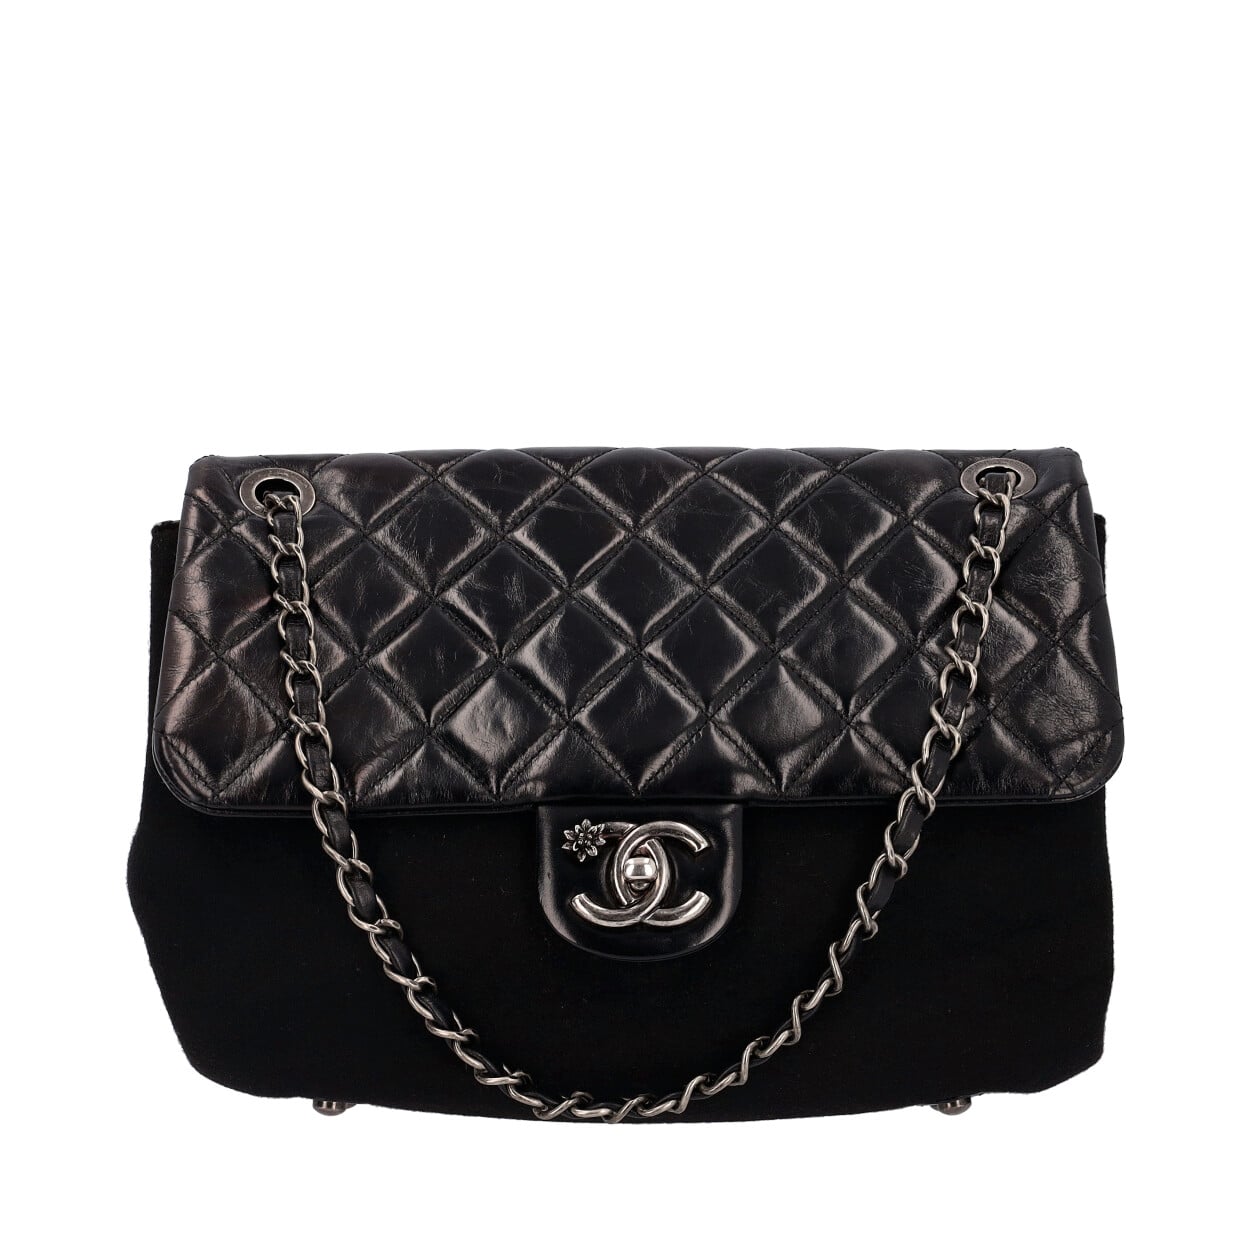 Chanel Half Moon Flap Quilted Leather Shoulder Bag